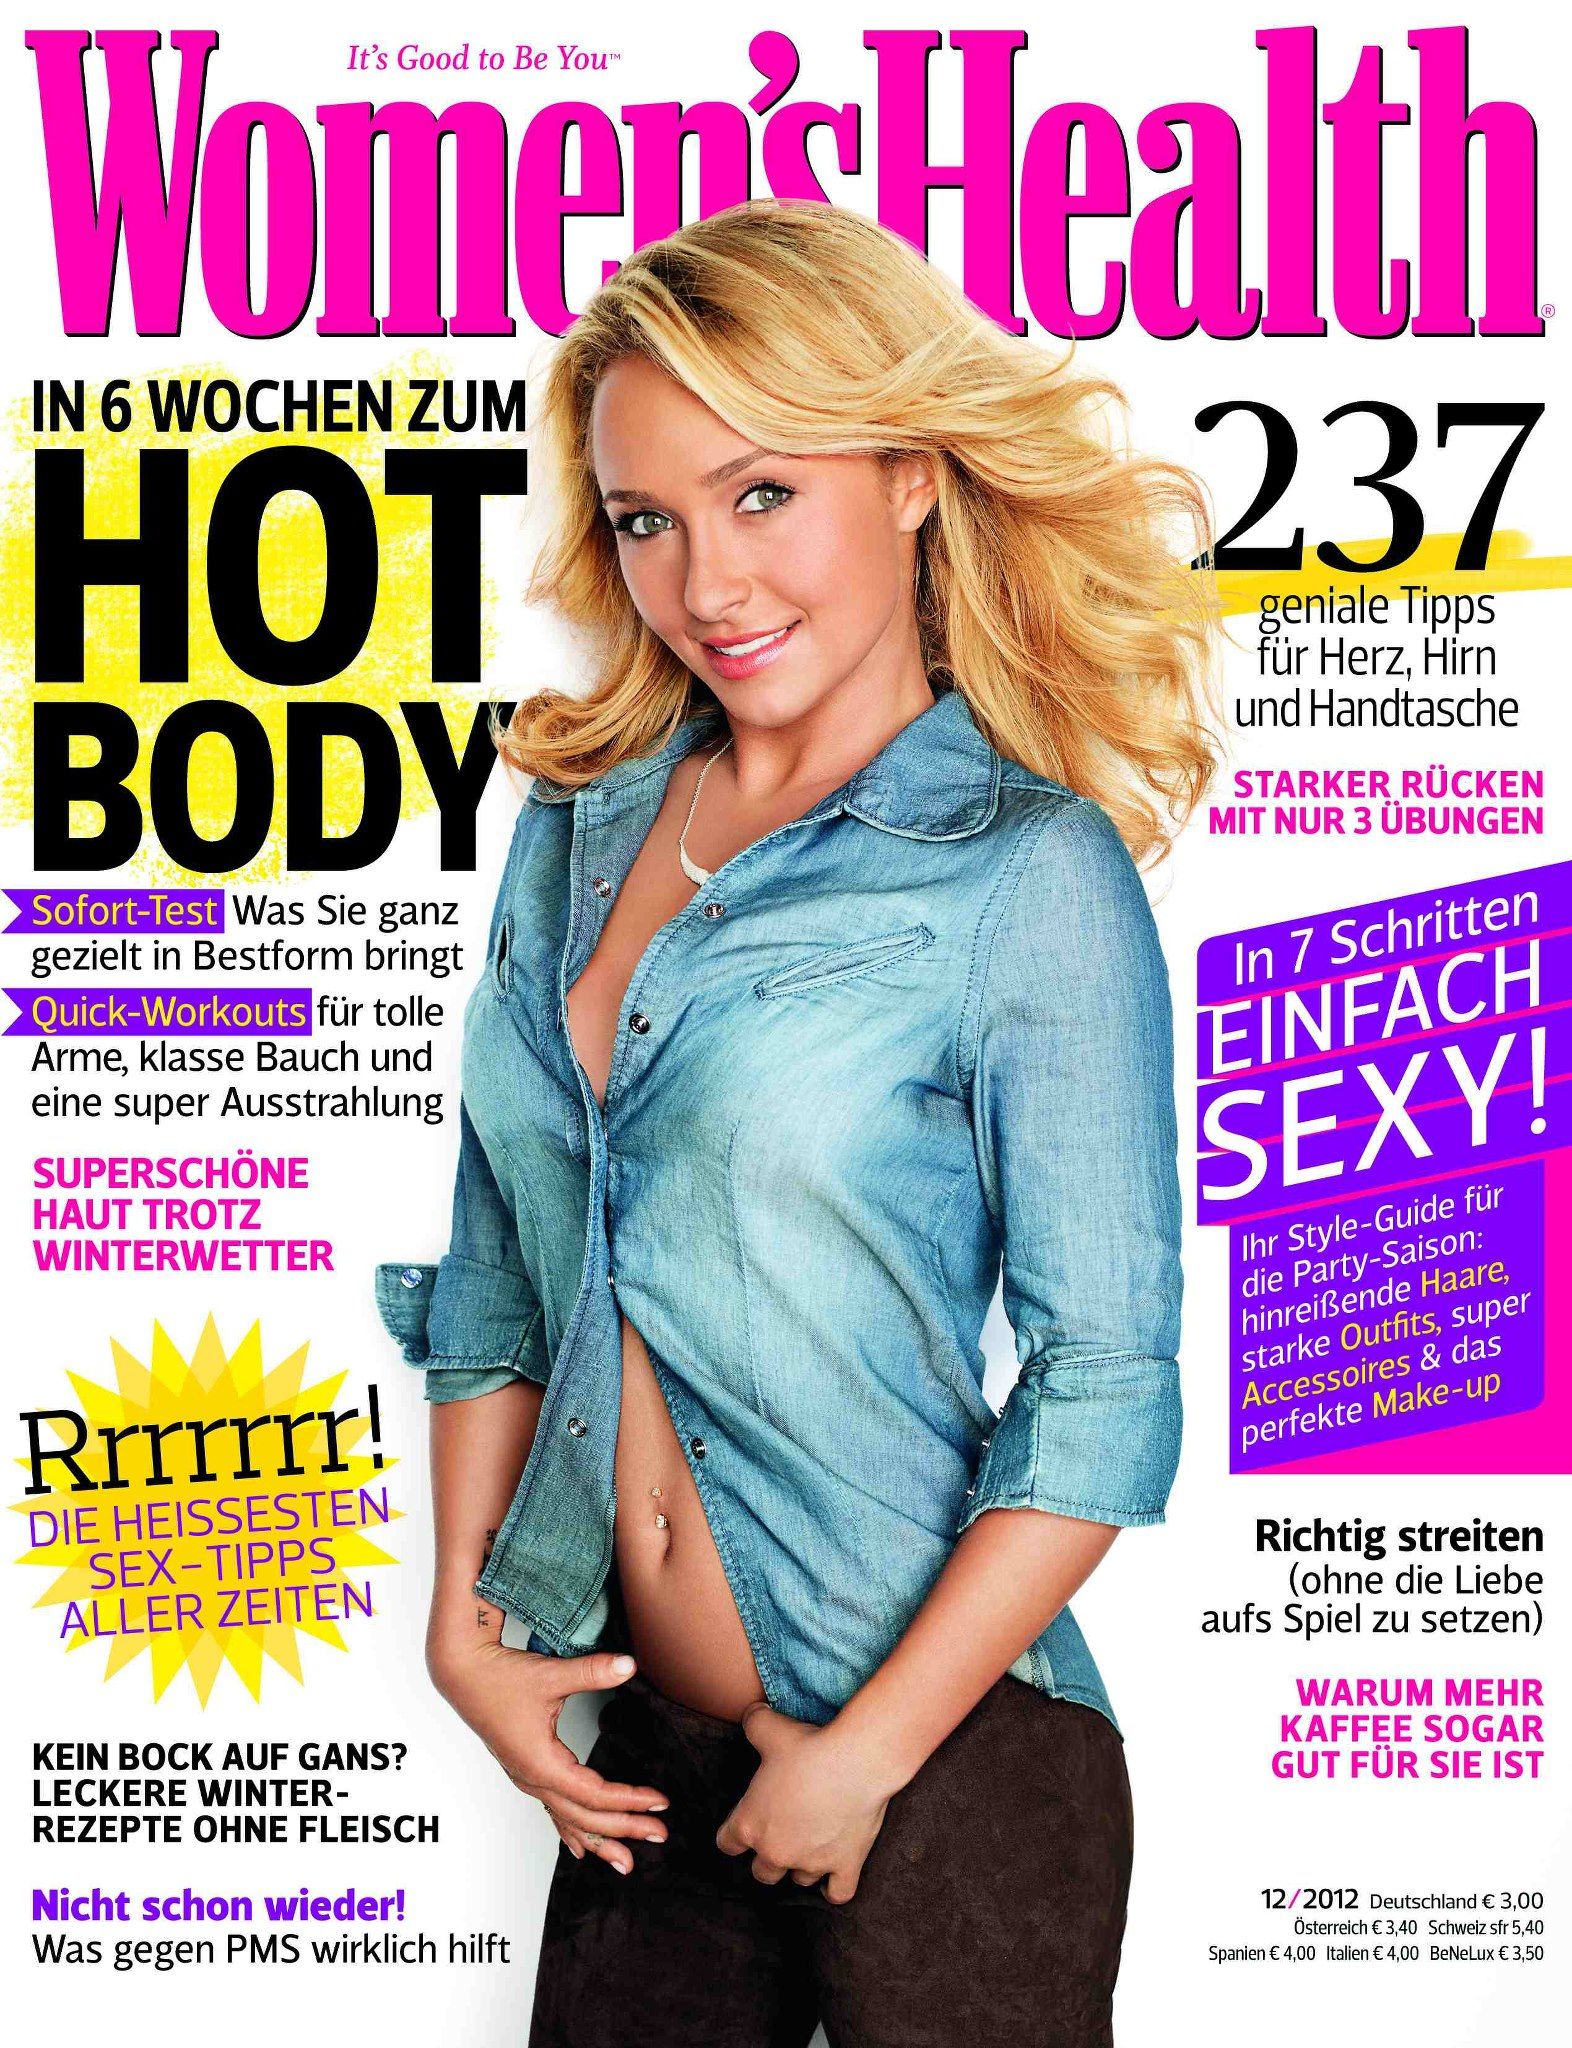 Hayden Panettiere - Women's Health Germany Magazine Cover (December 2012)